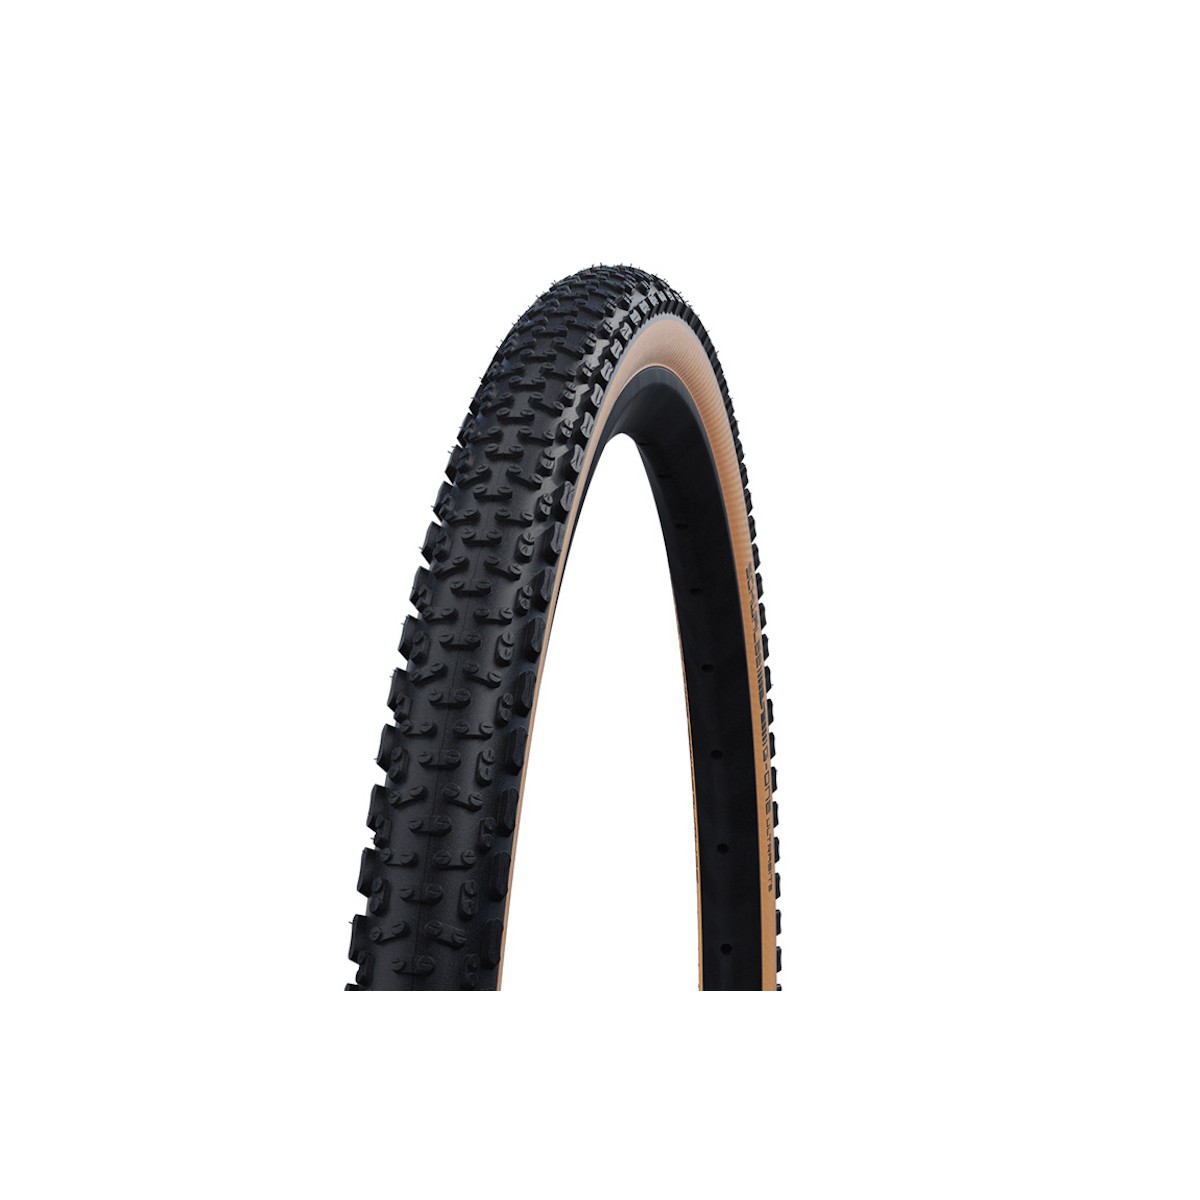 SCHWALBE G-ONE ULTRABITE 700 x 40C tubeless tyre